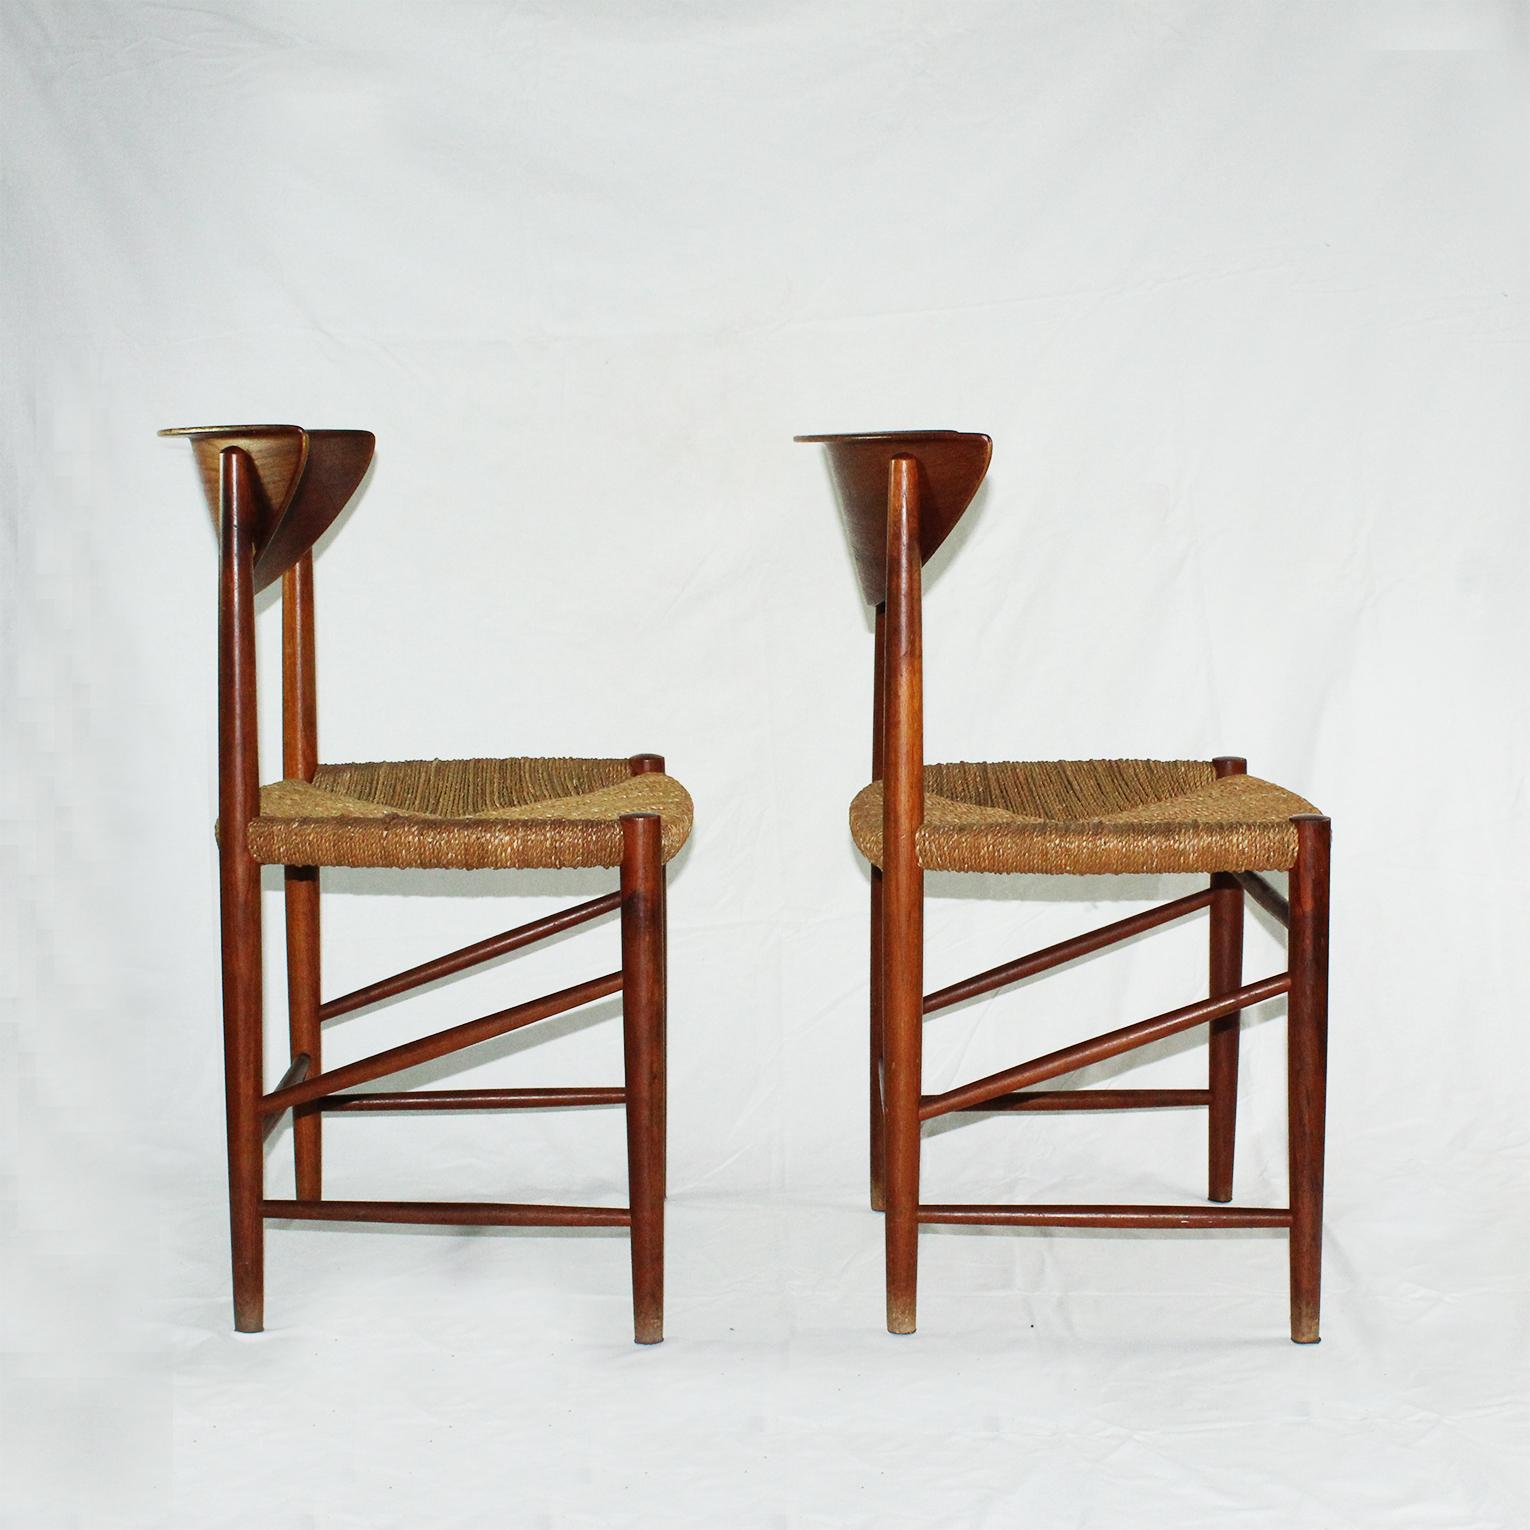 Scandinavian Modern Vintage Scandinavian Dining Chair Teak Design by Peter Hvidt and Orla Mølgaard